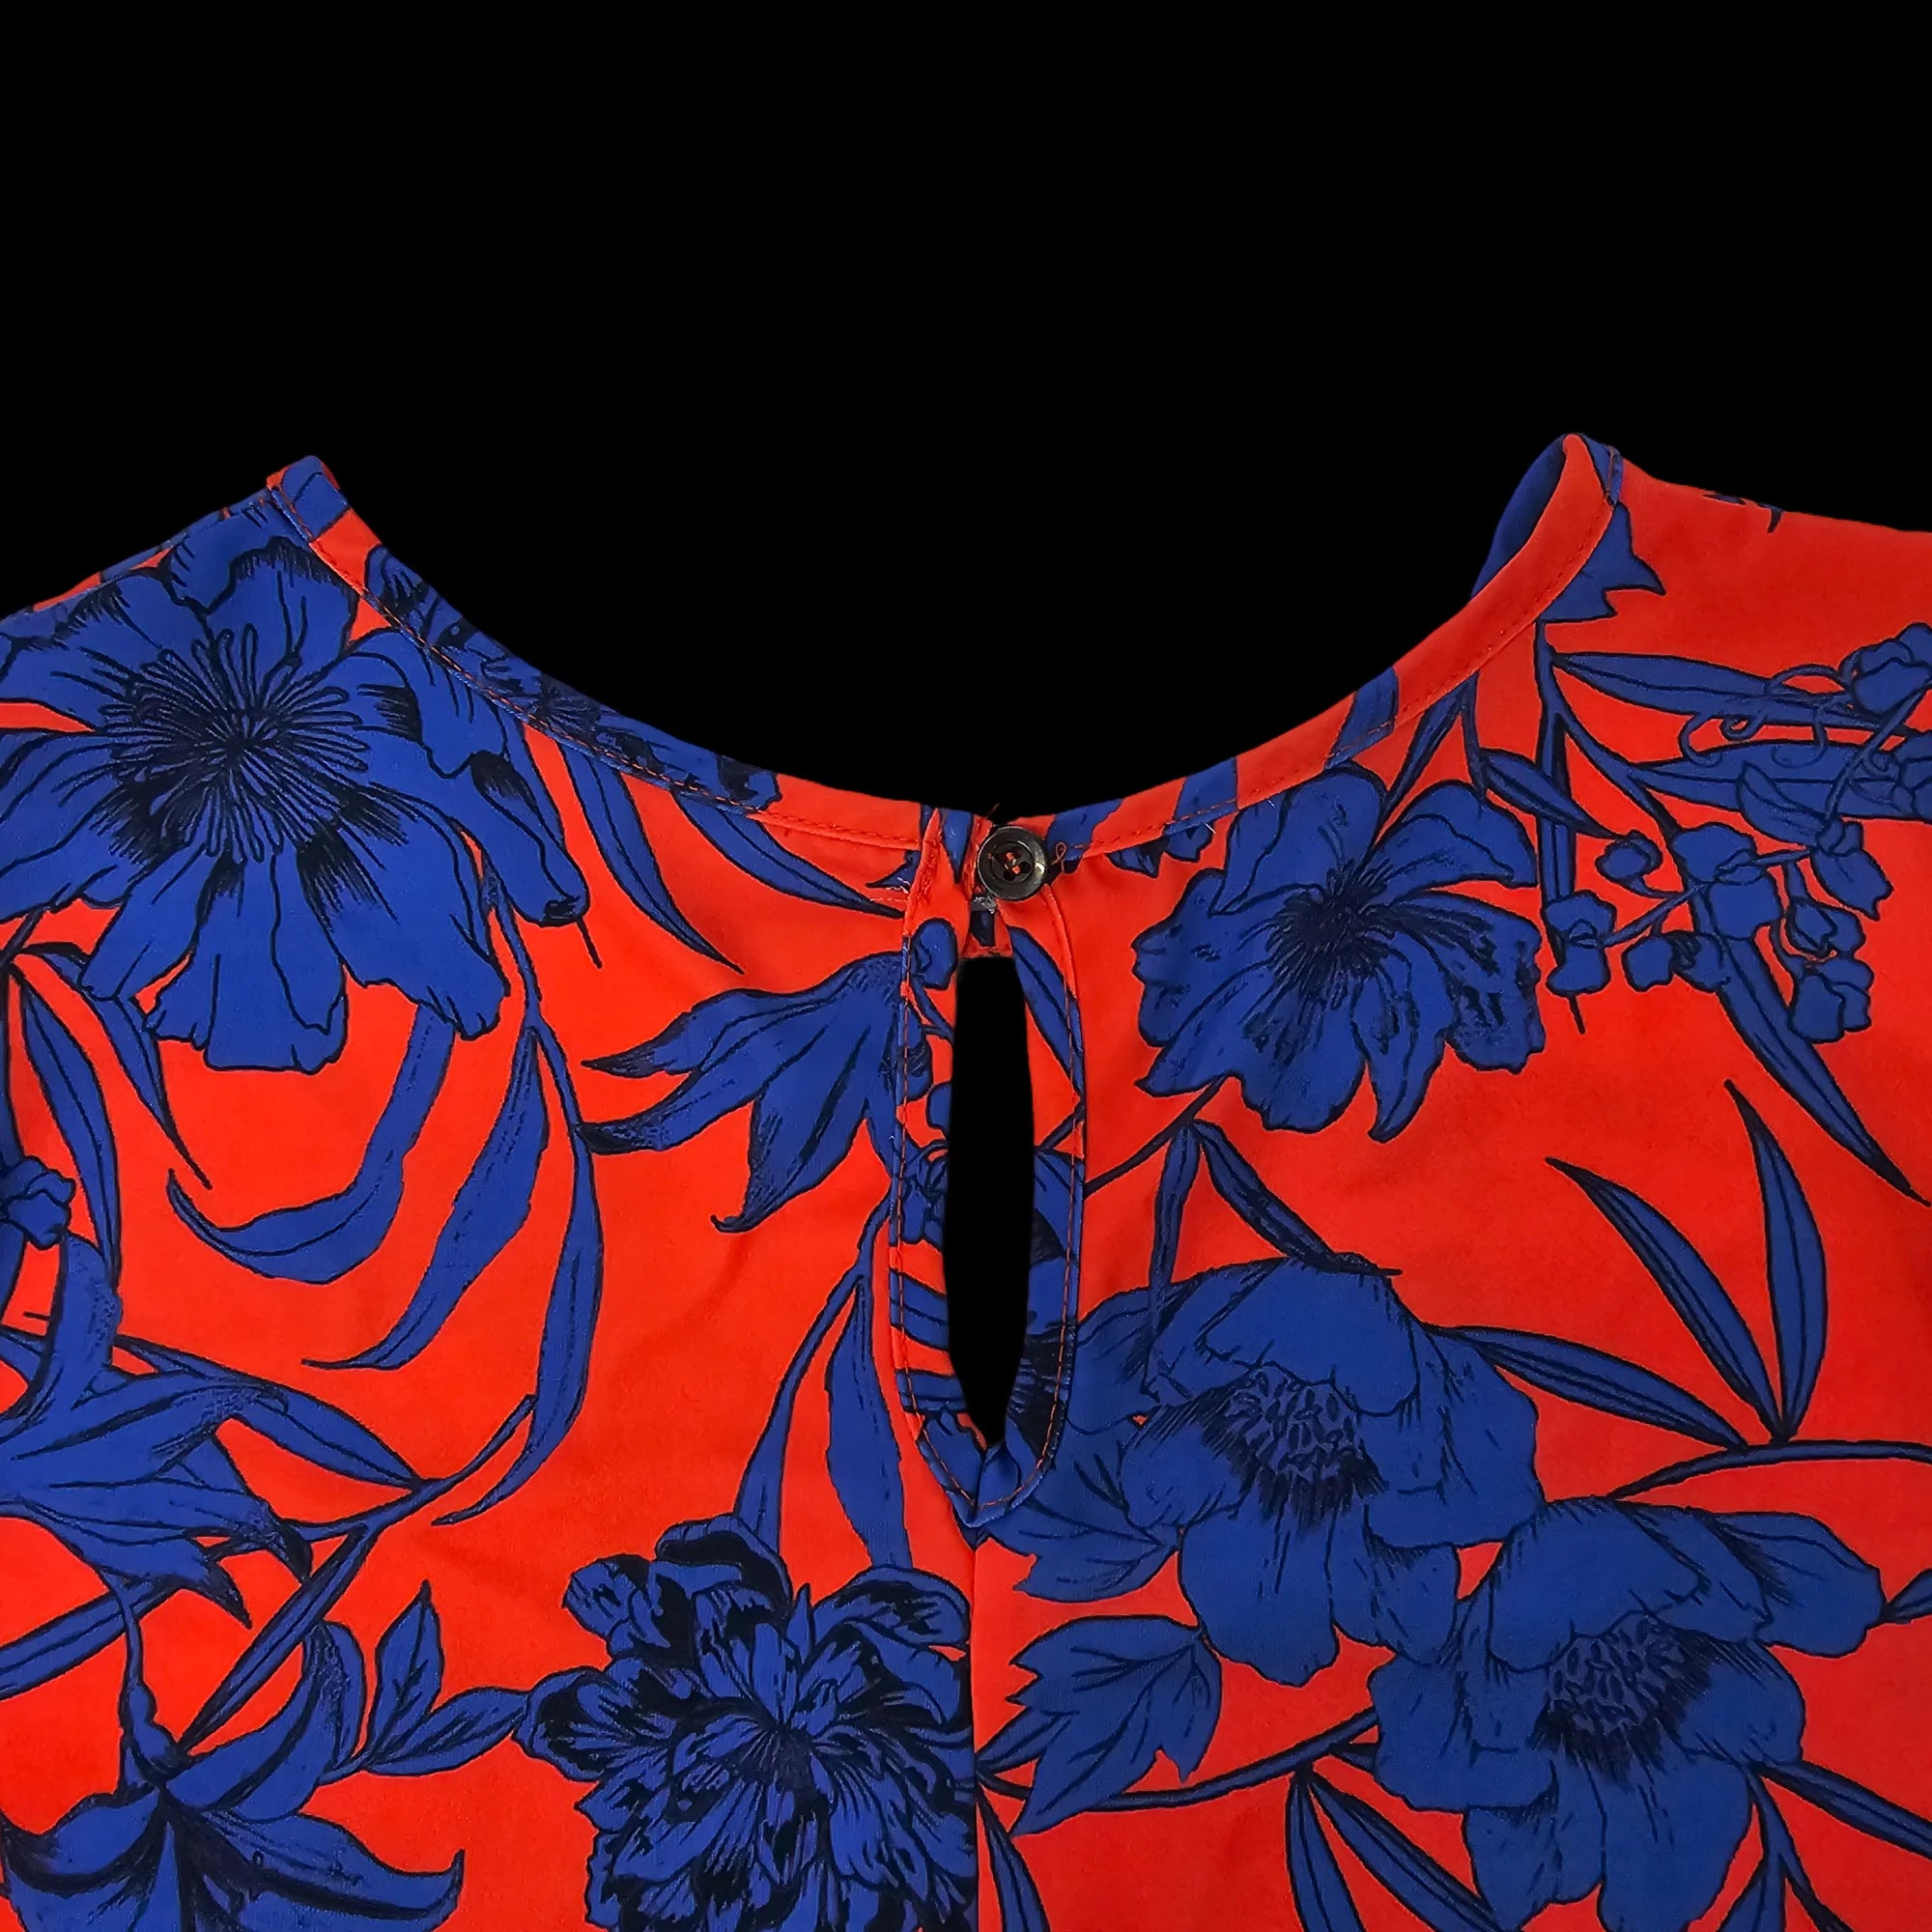 Women’s George Floral Print Shift Dress UK 14 - Dresses